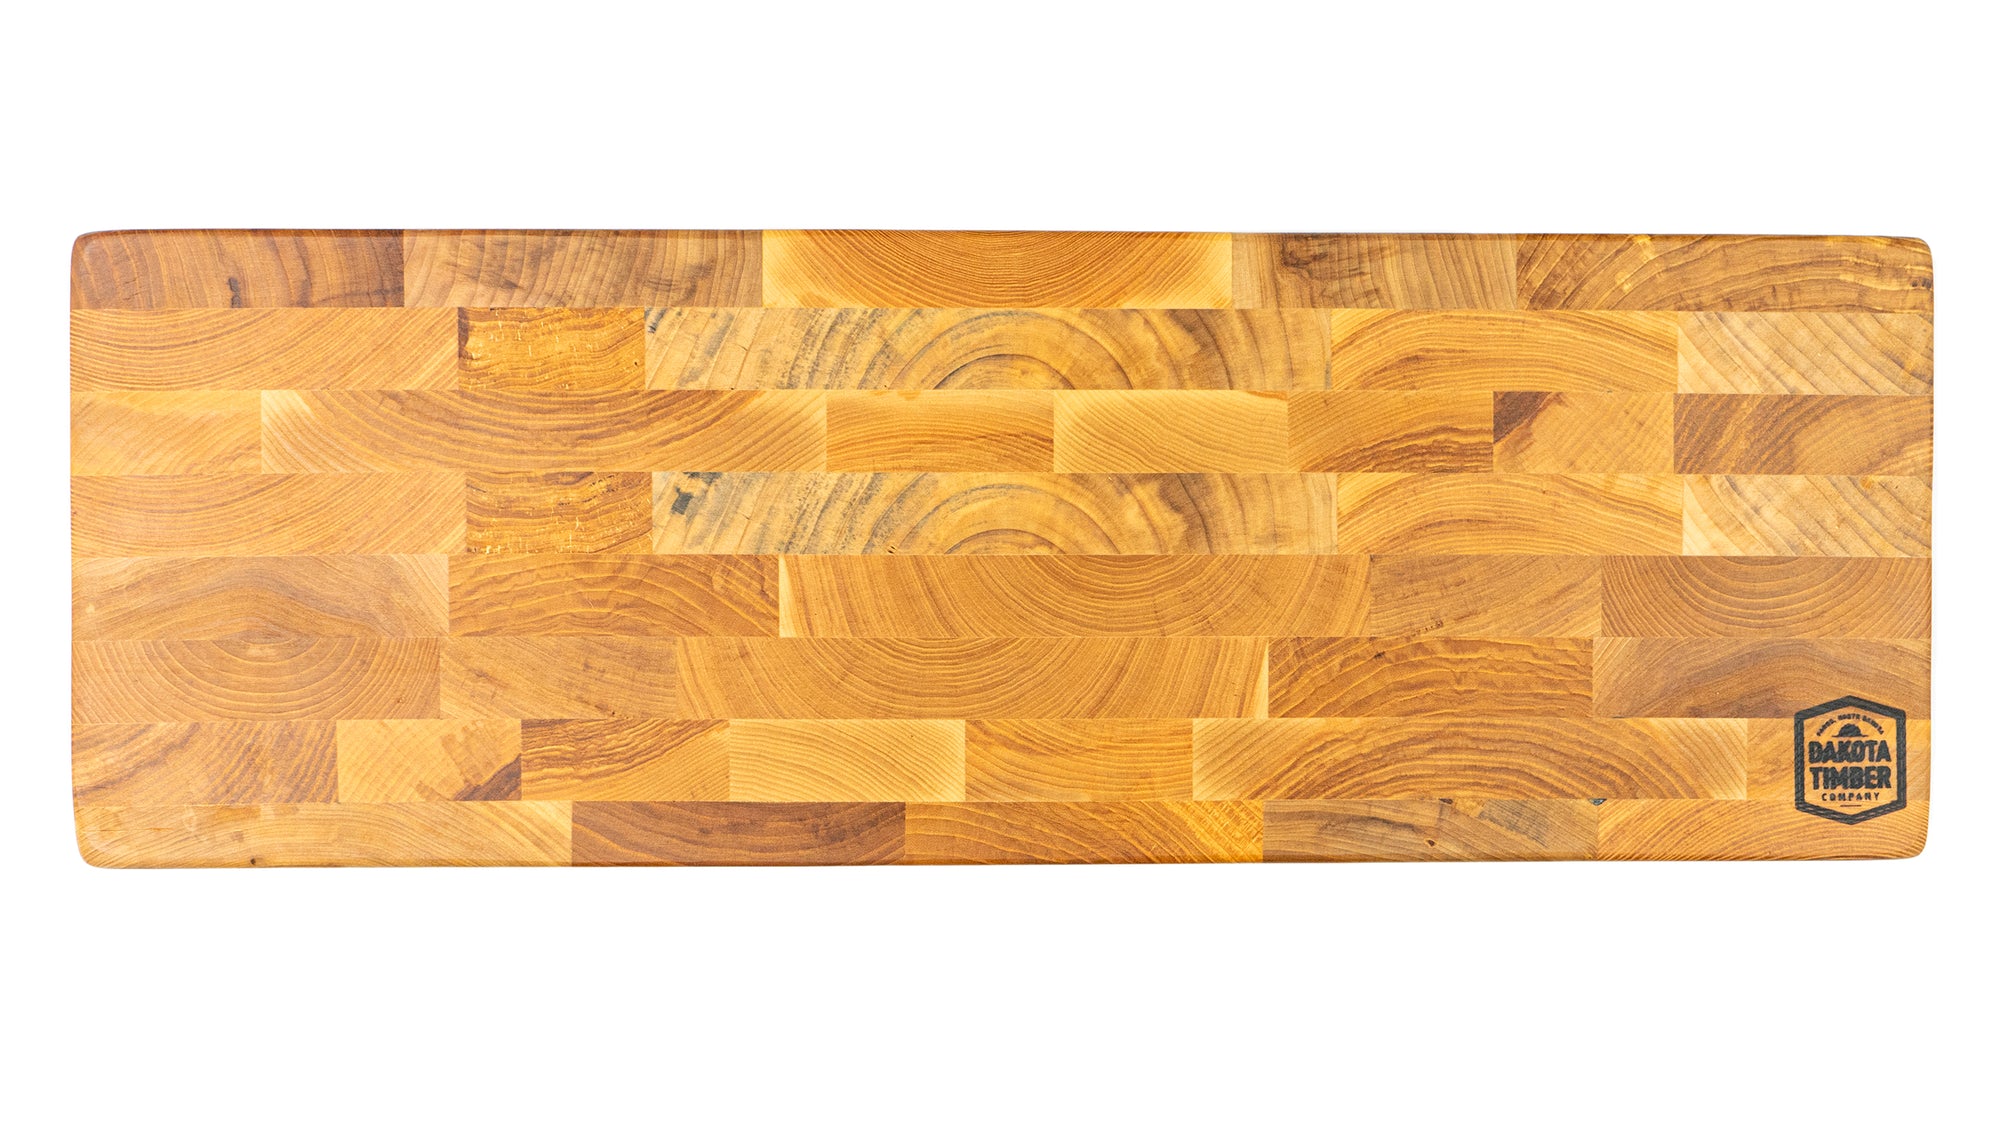 9.75" x 28.75" x 2.25" End Grain Cutting Board - Dakota Timber Co